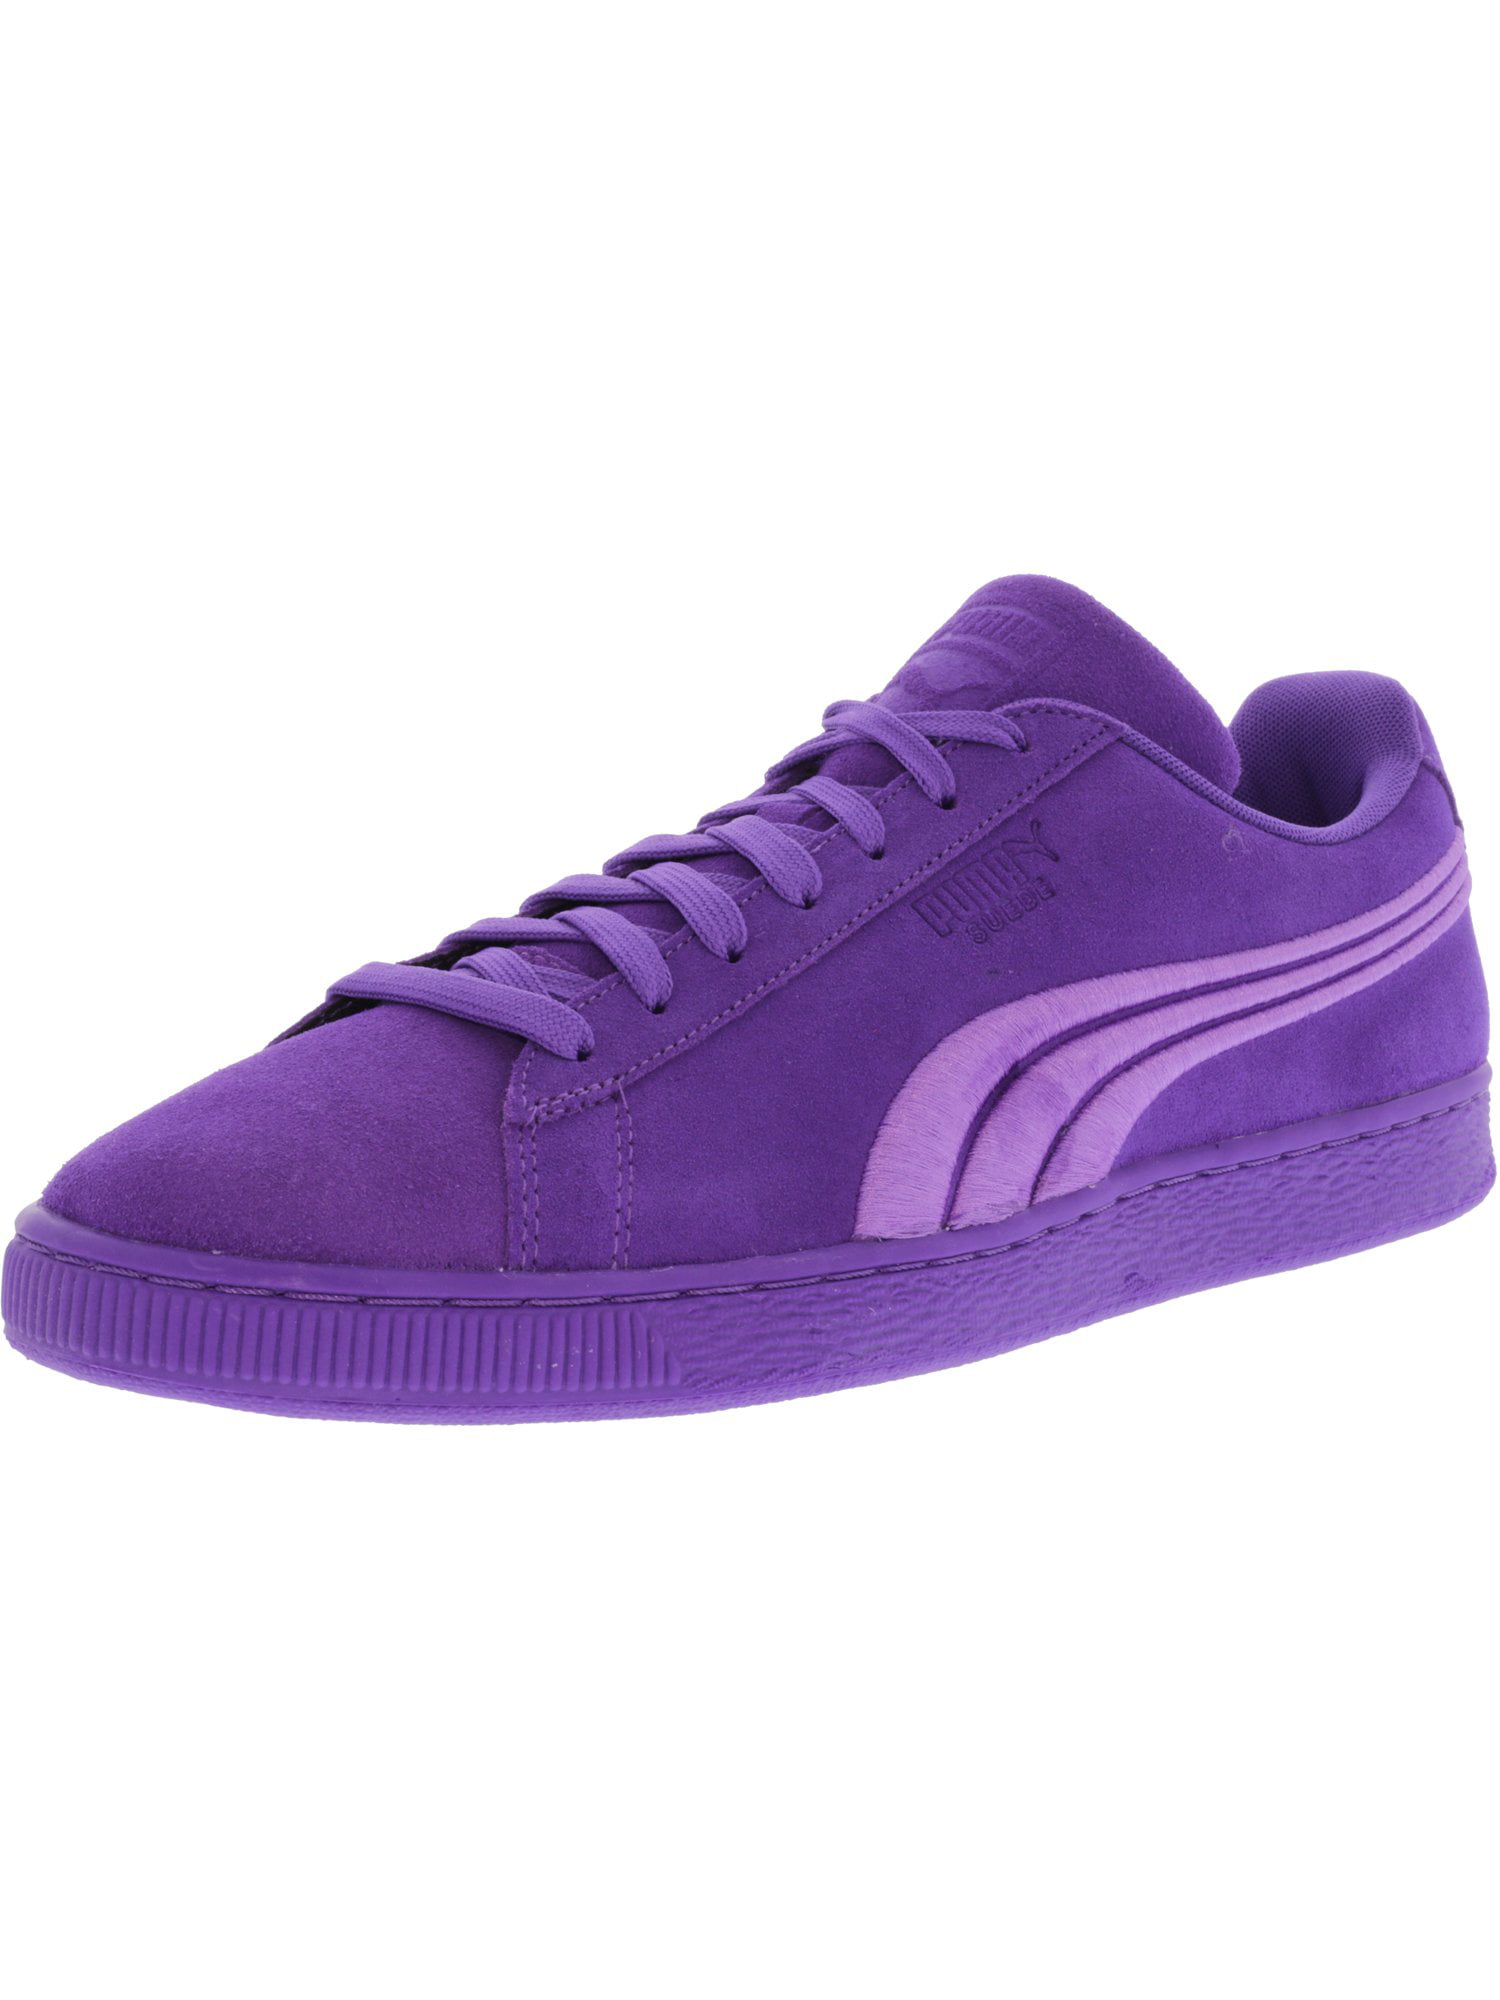 puma purple suede shoes